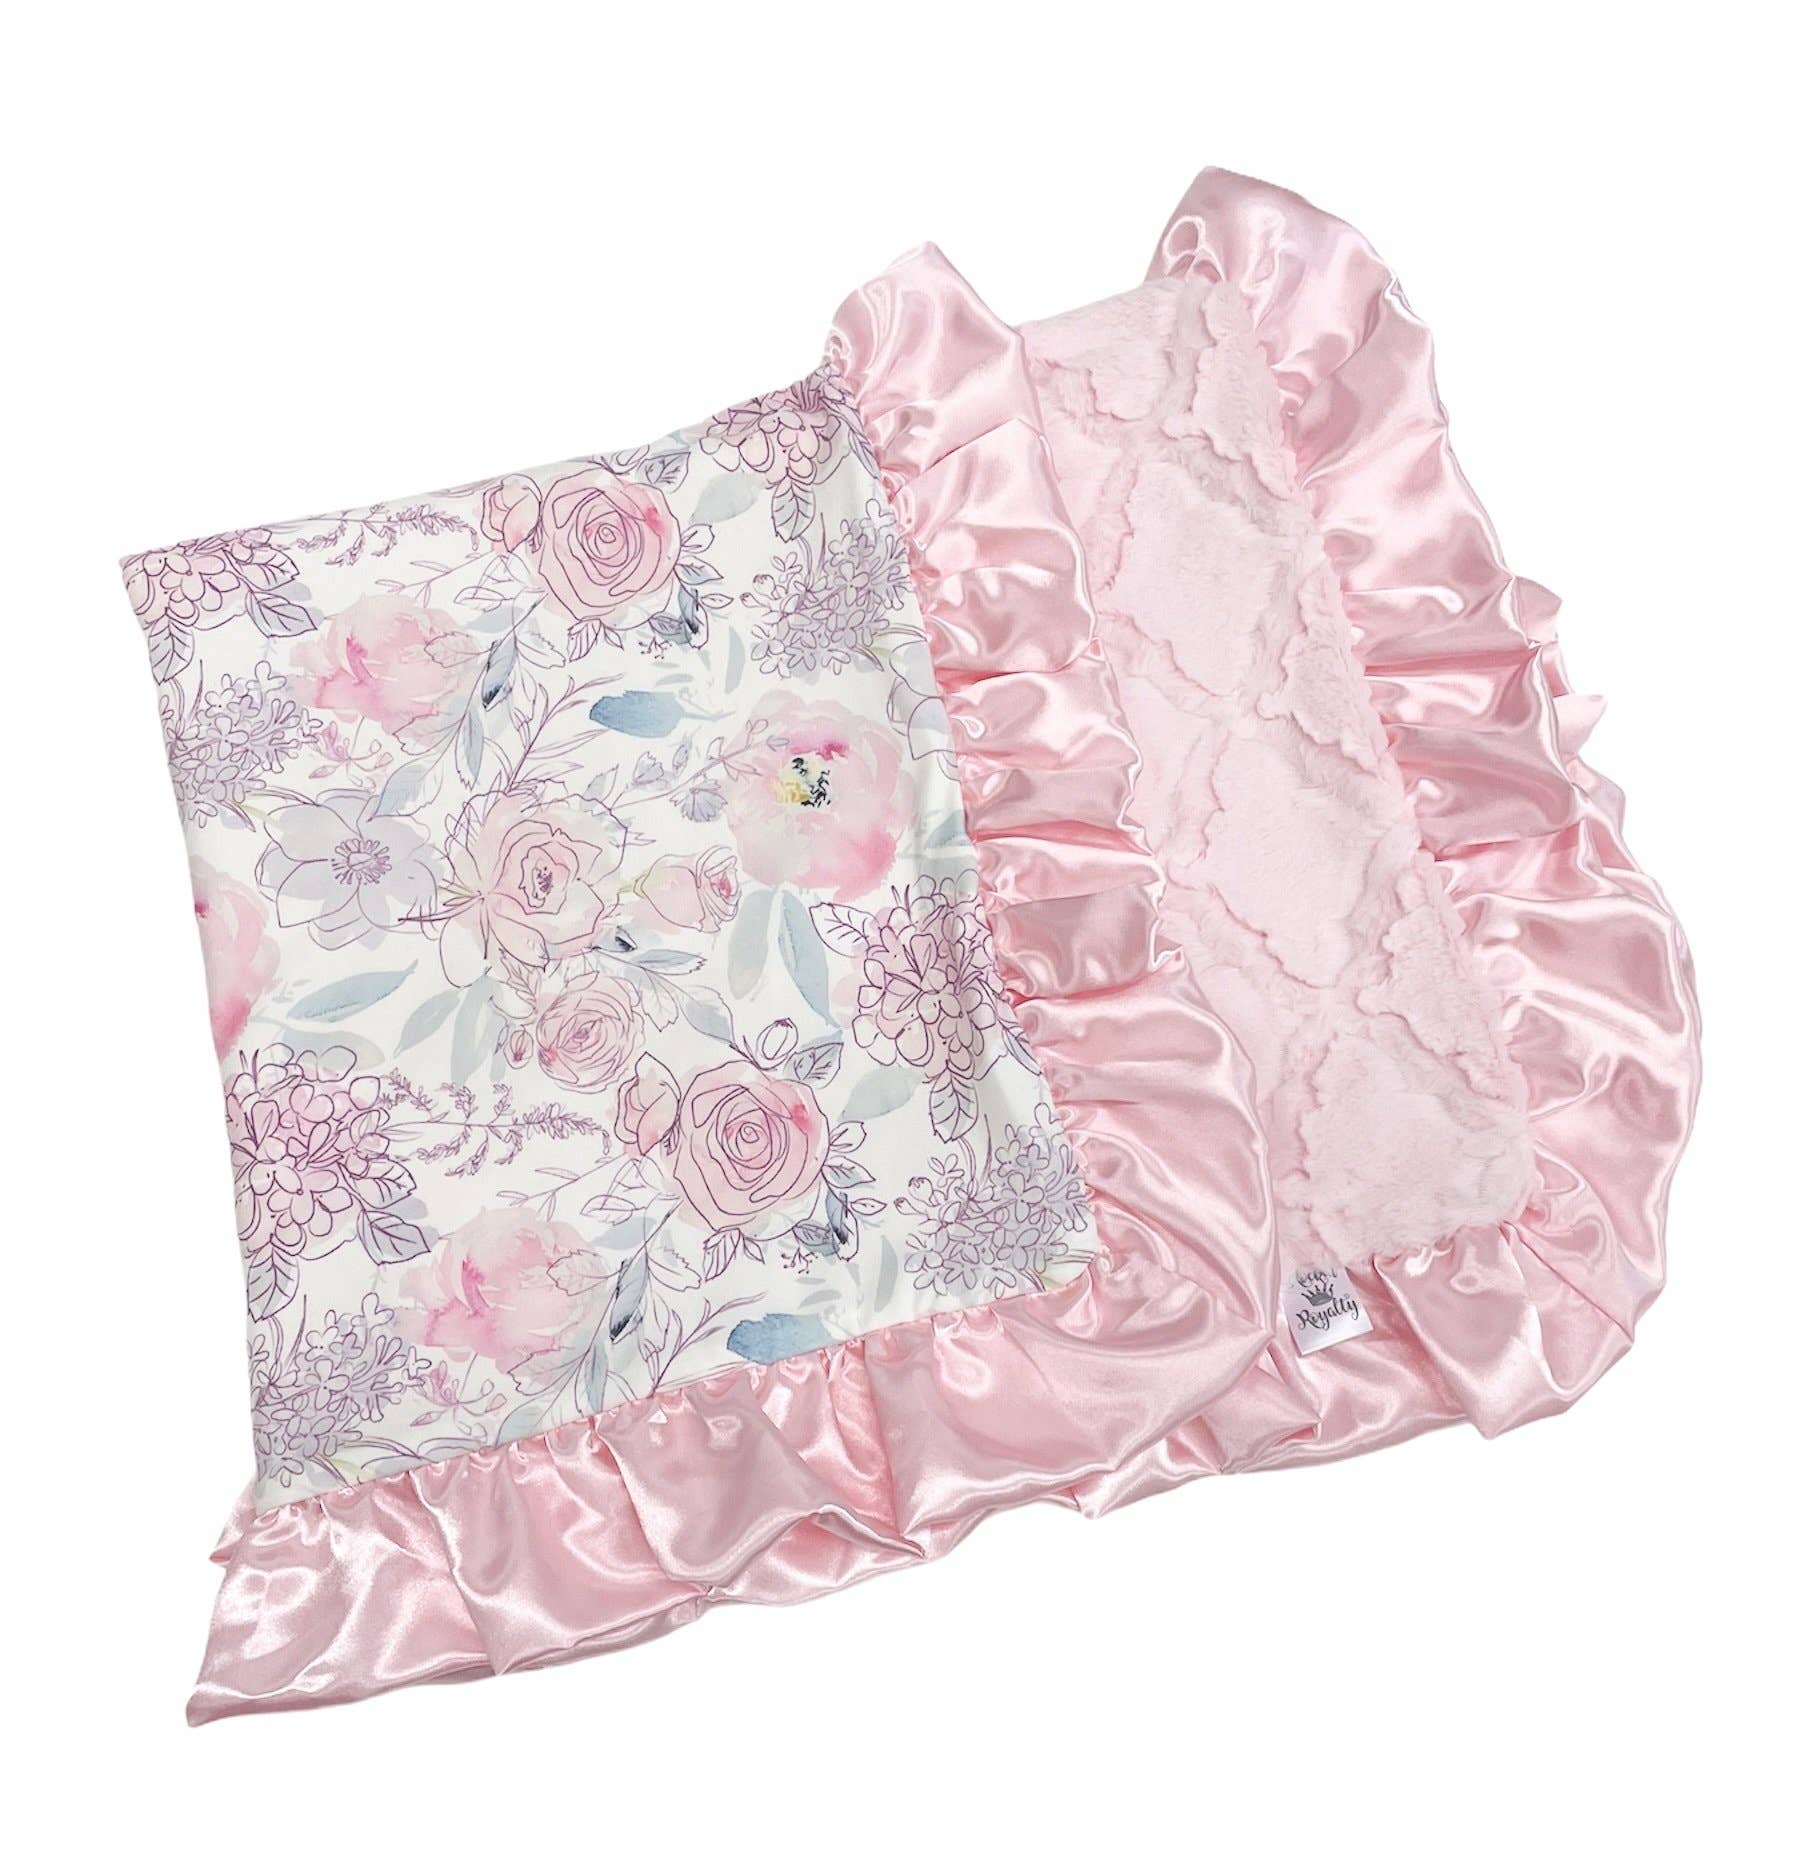 Luxe Cuddle Blanket - Bashful Pink Floral